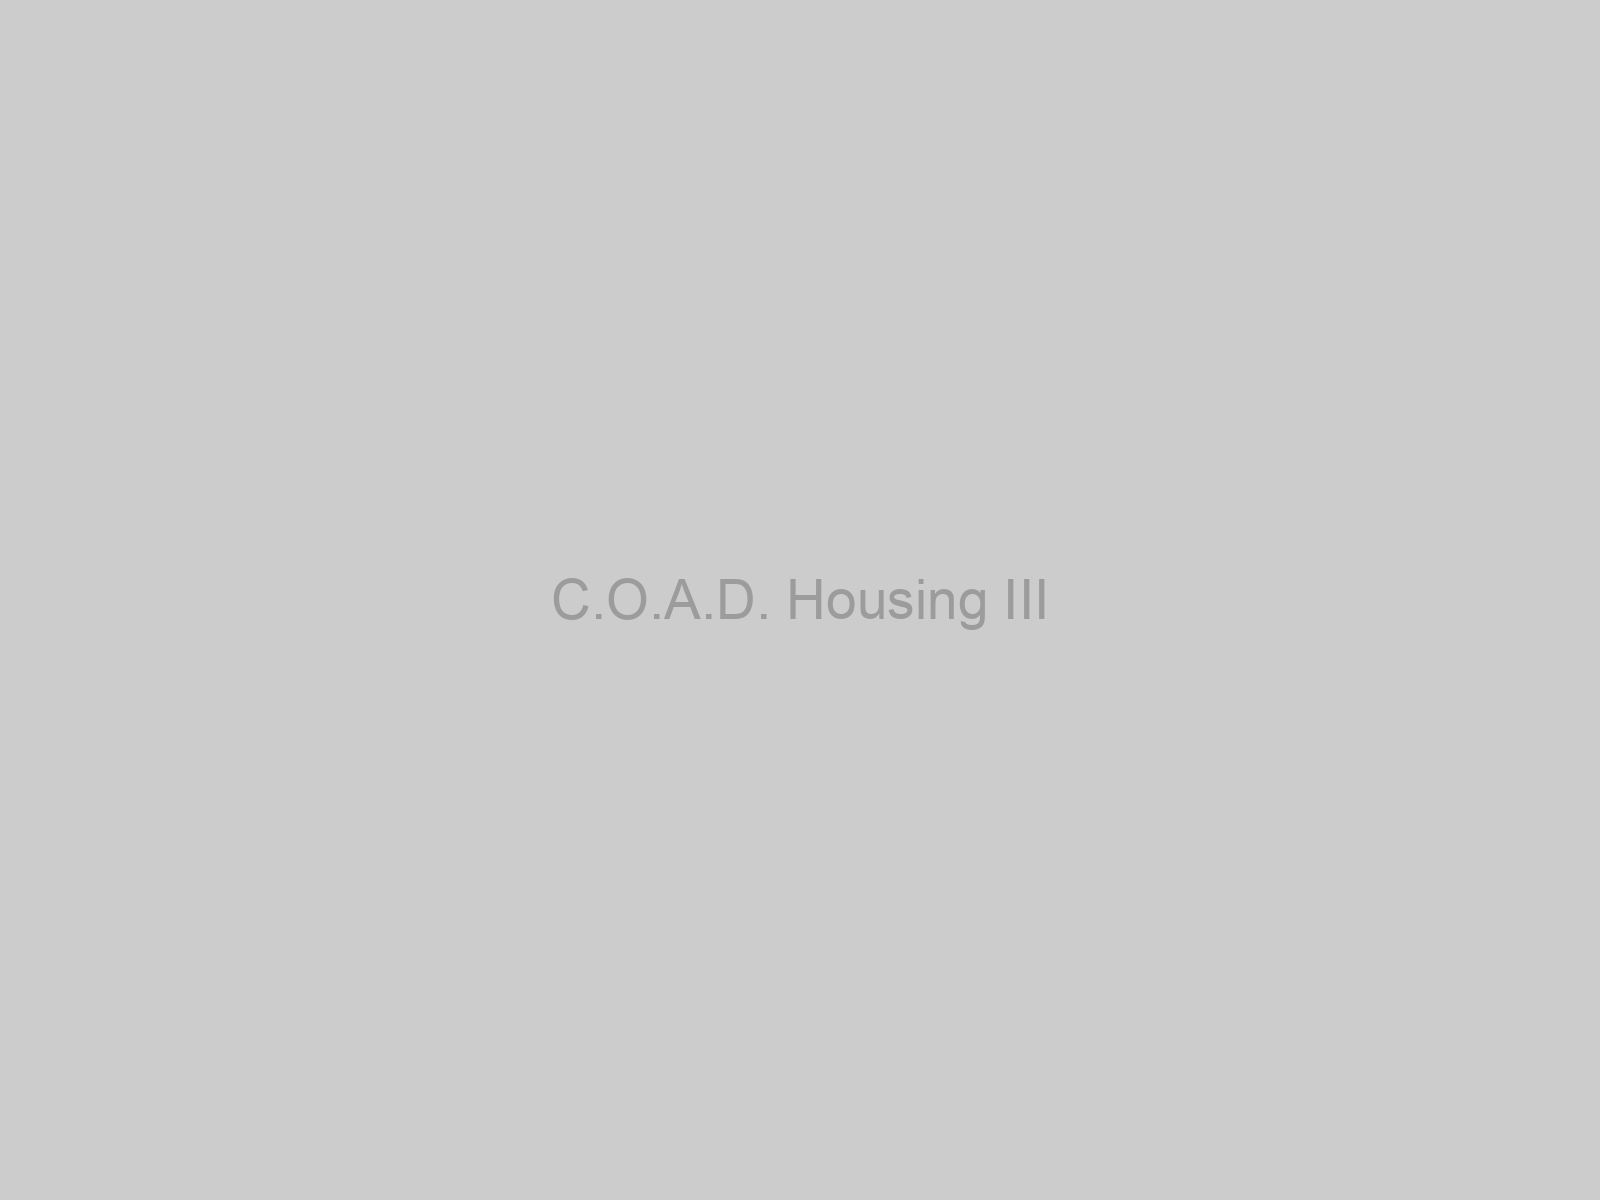 C.O.A.D. Housing III